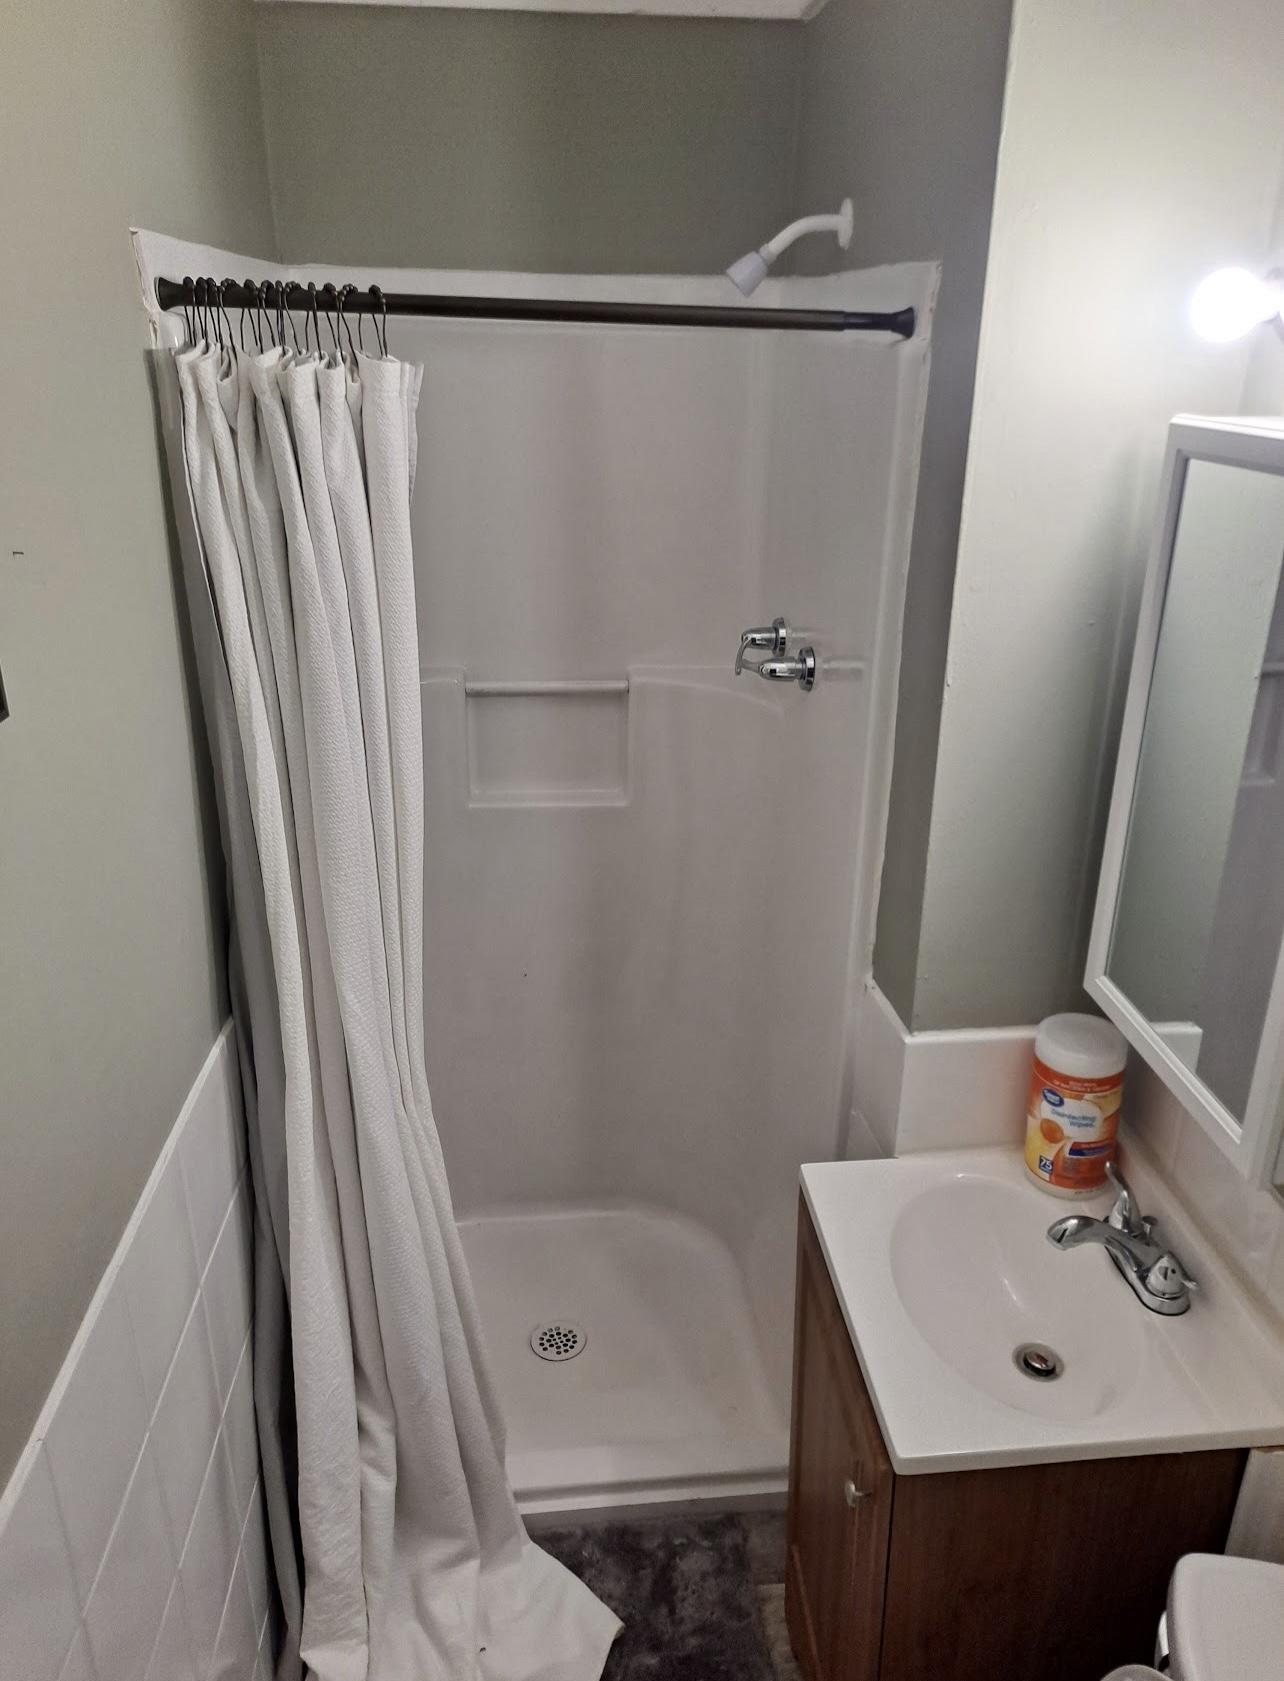 Shared bathroom 1 - Shower